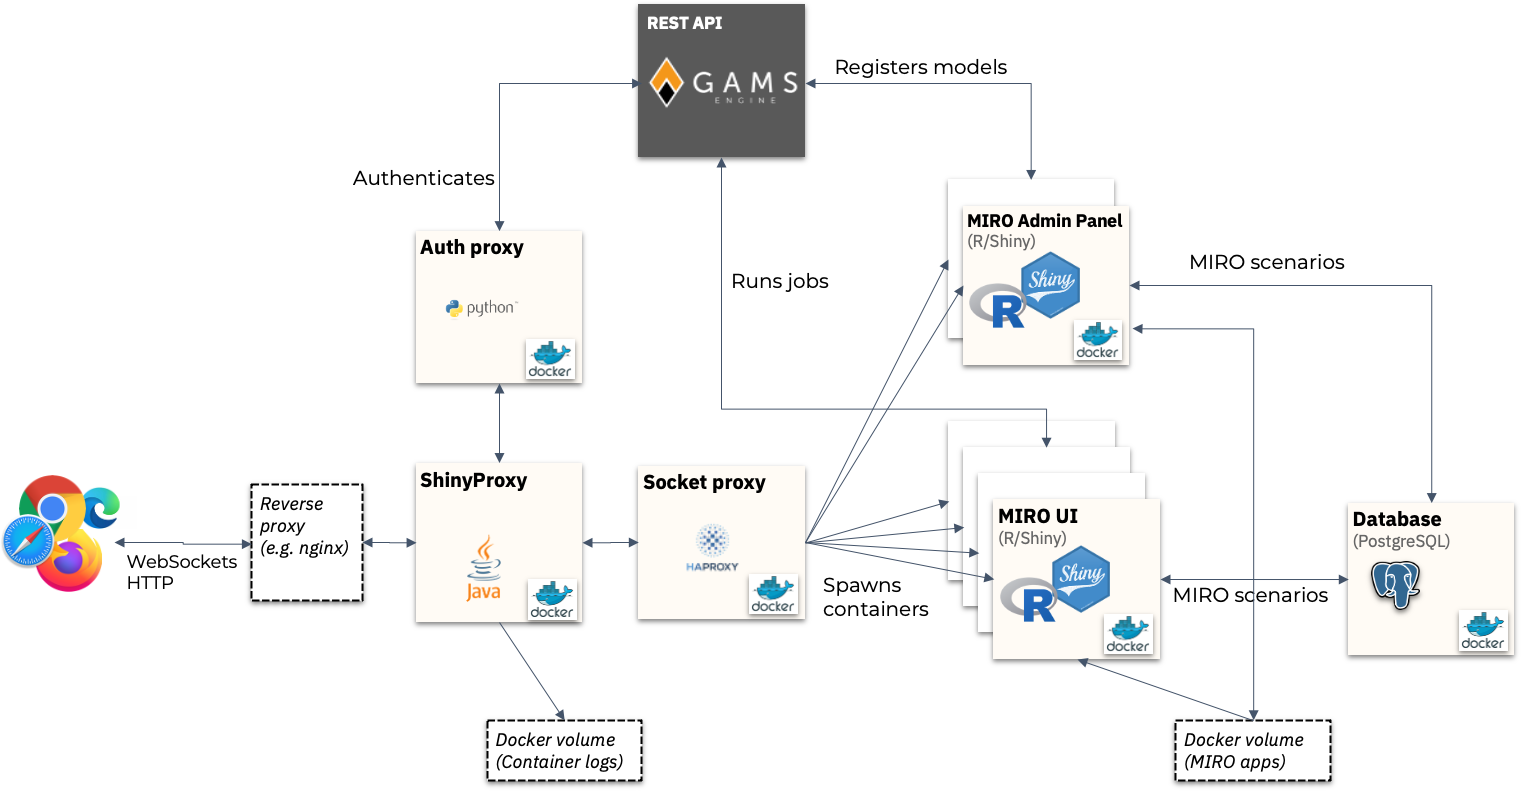 GAMS MIRO Server architecture